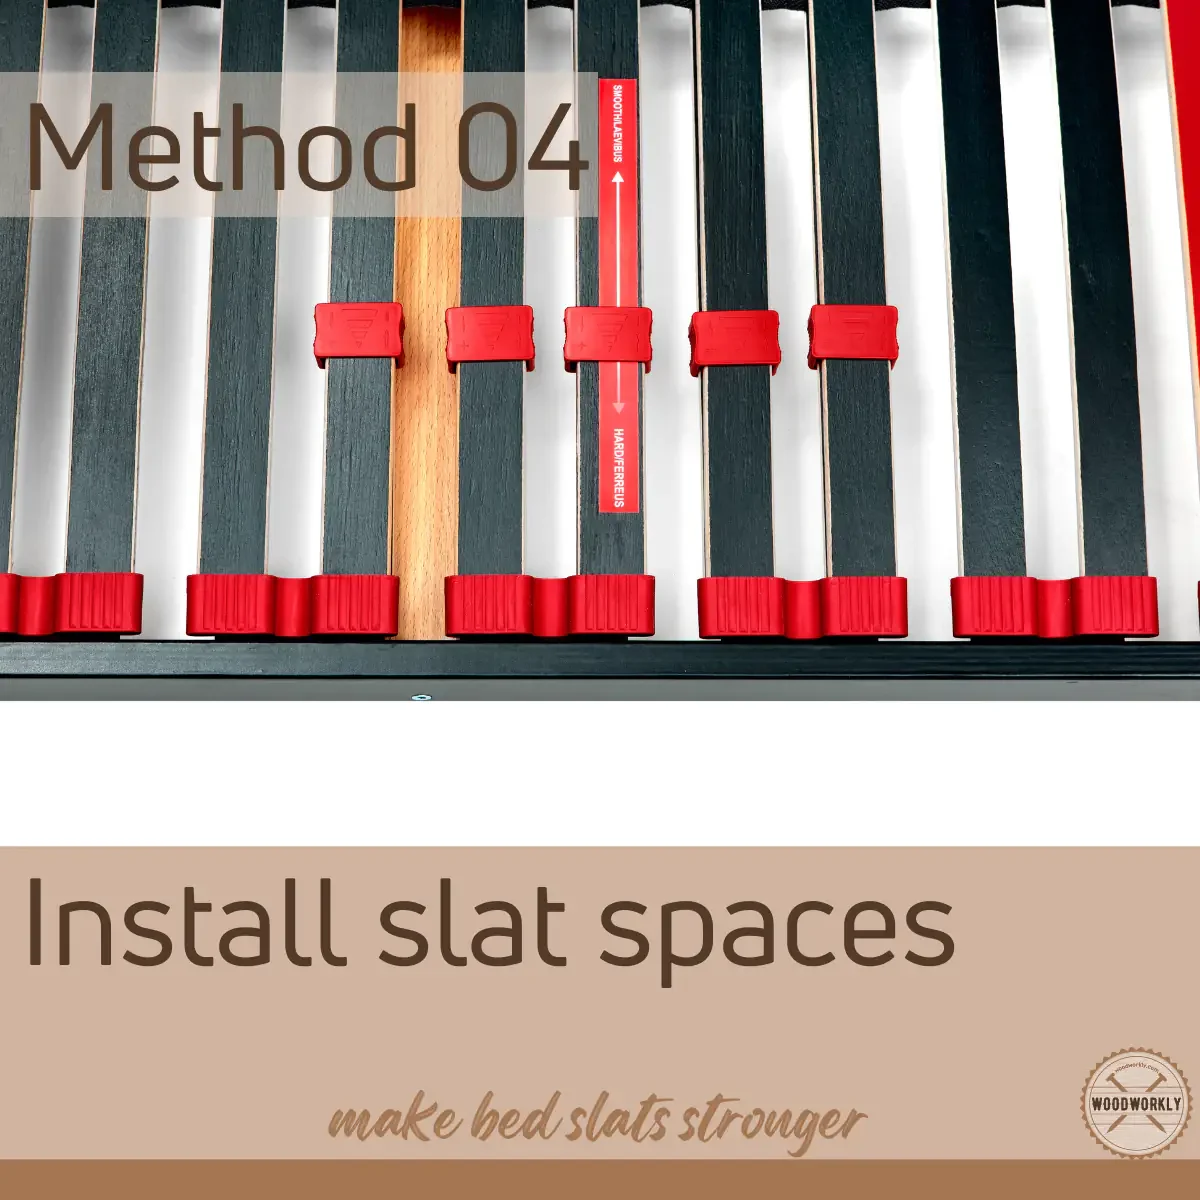 install slat spaces to make slats stronger